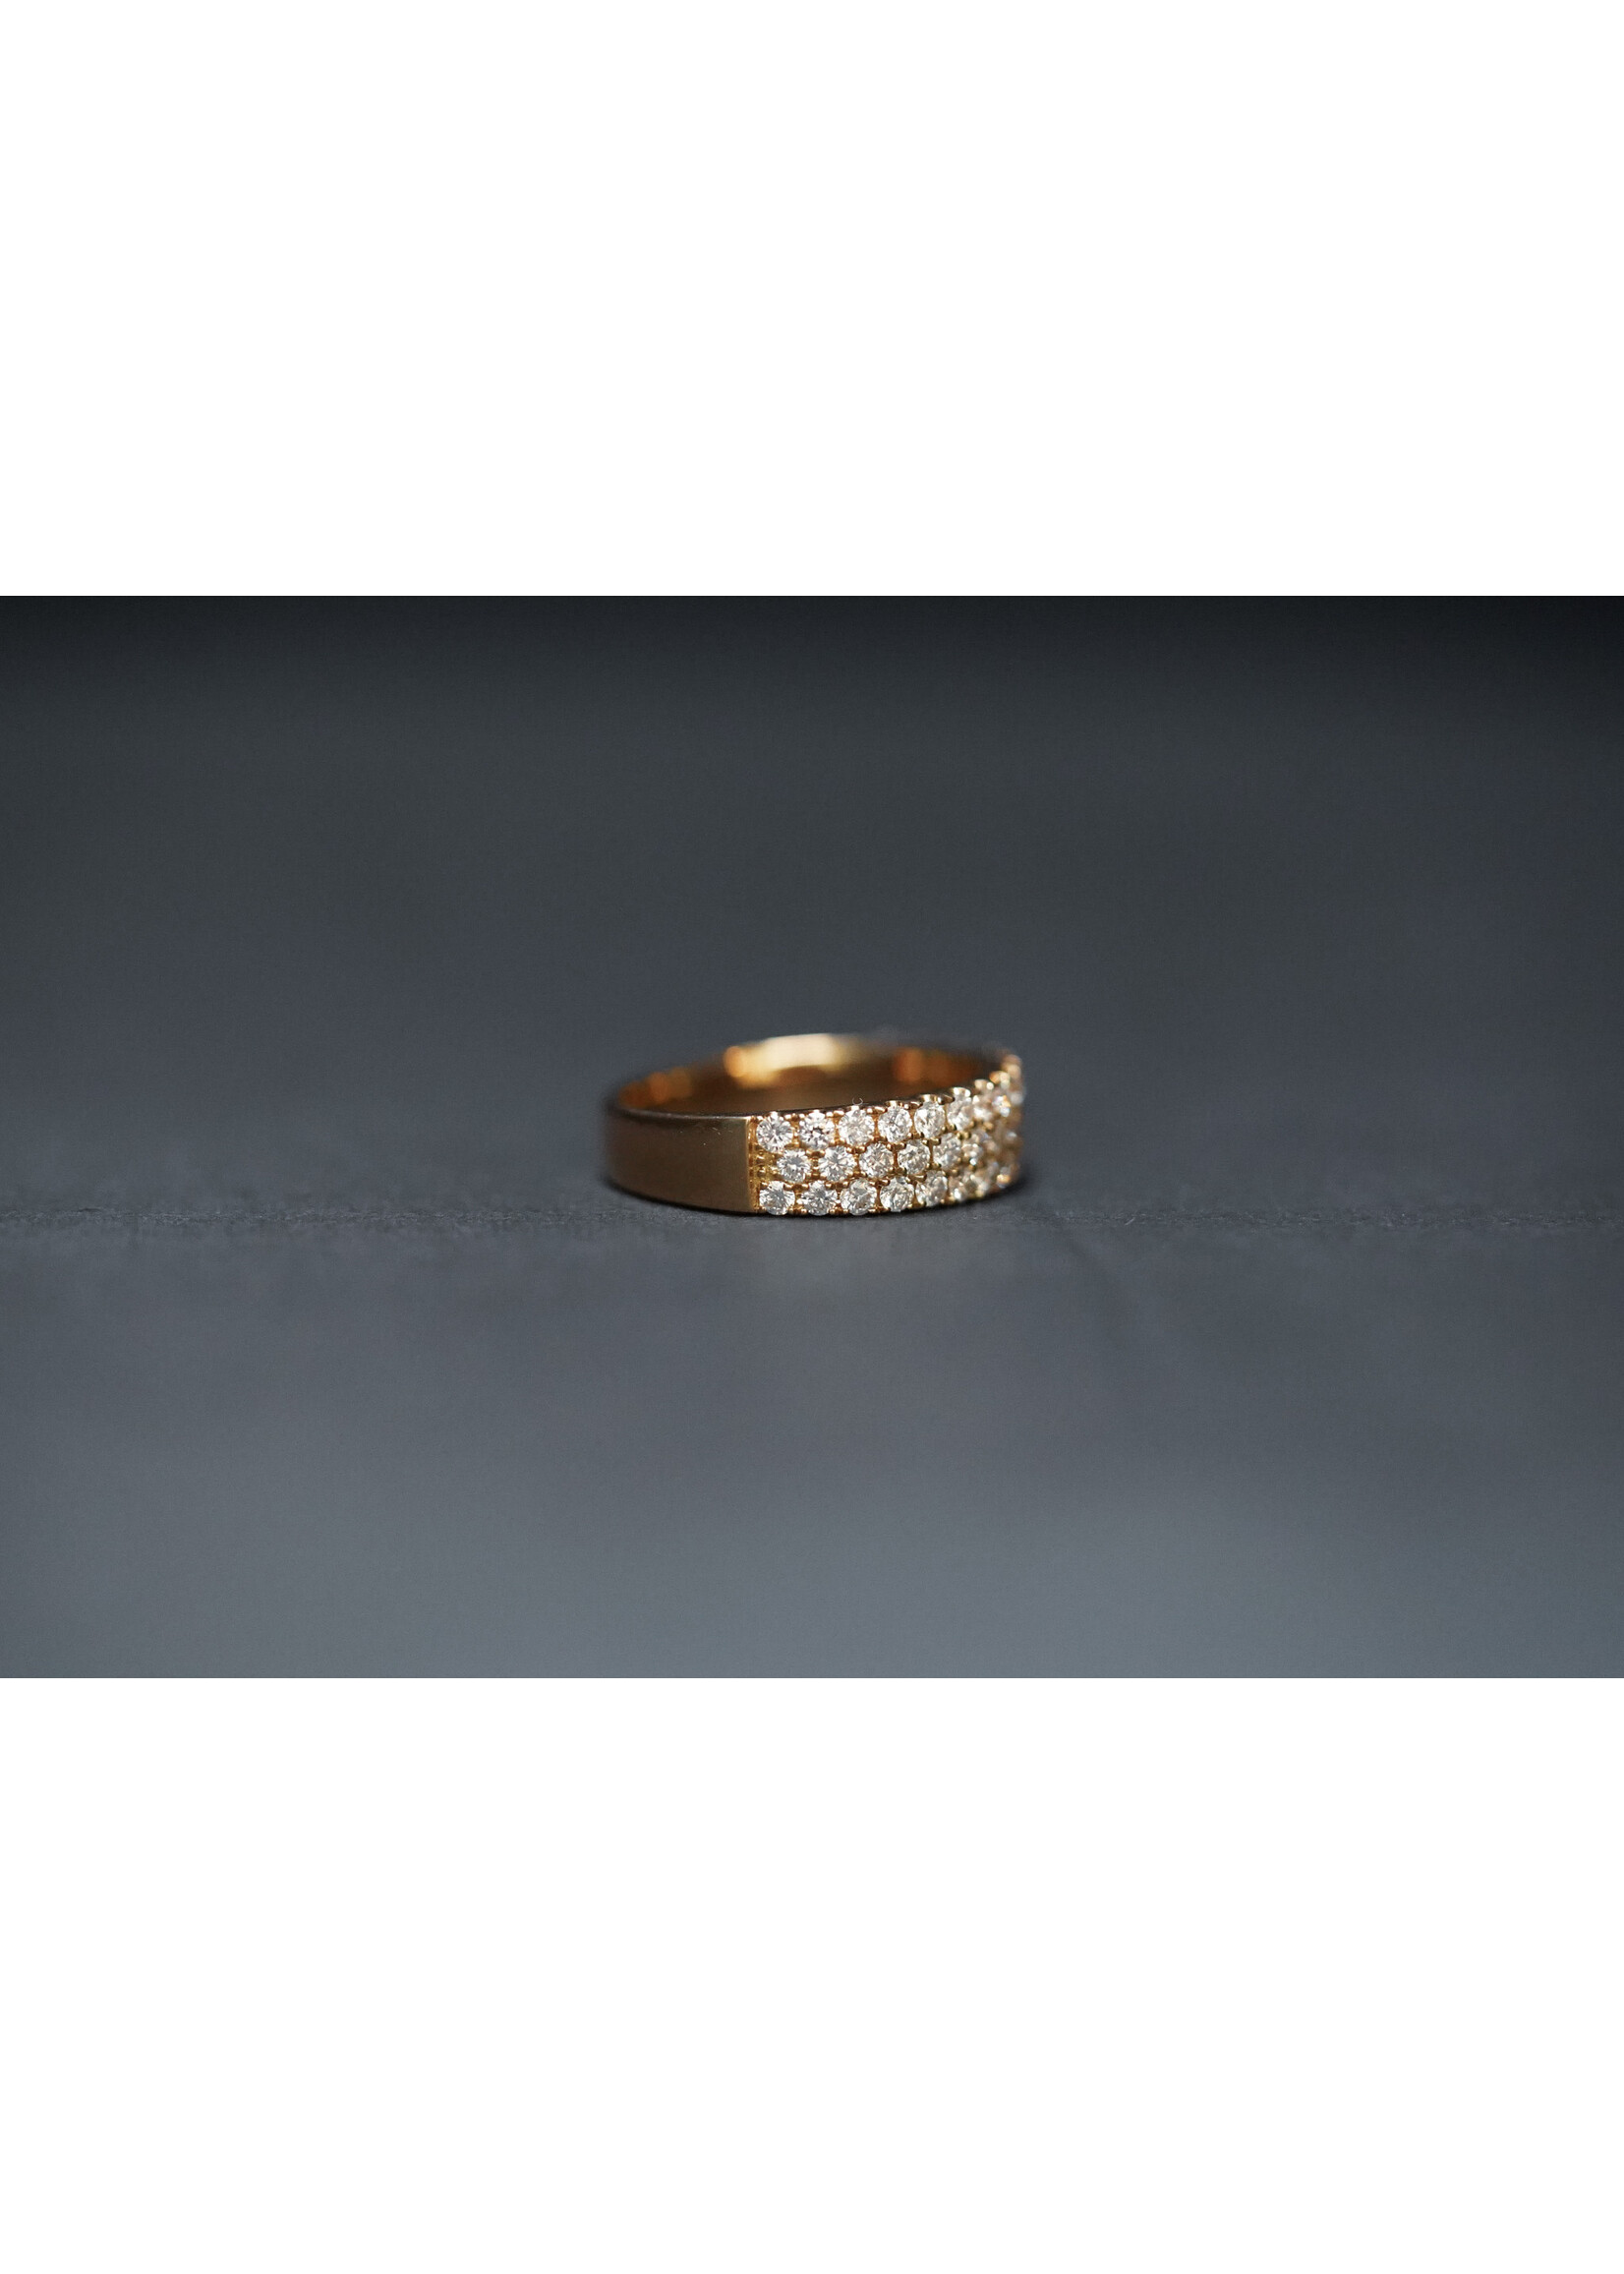 18KY 4.99g .97ctw Diamond Fashion Ring (size 6.5)